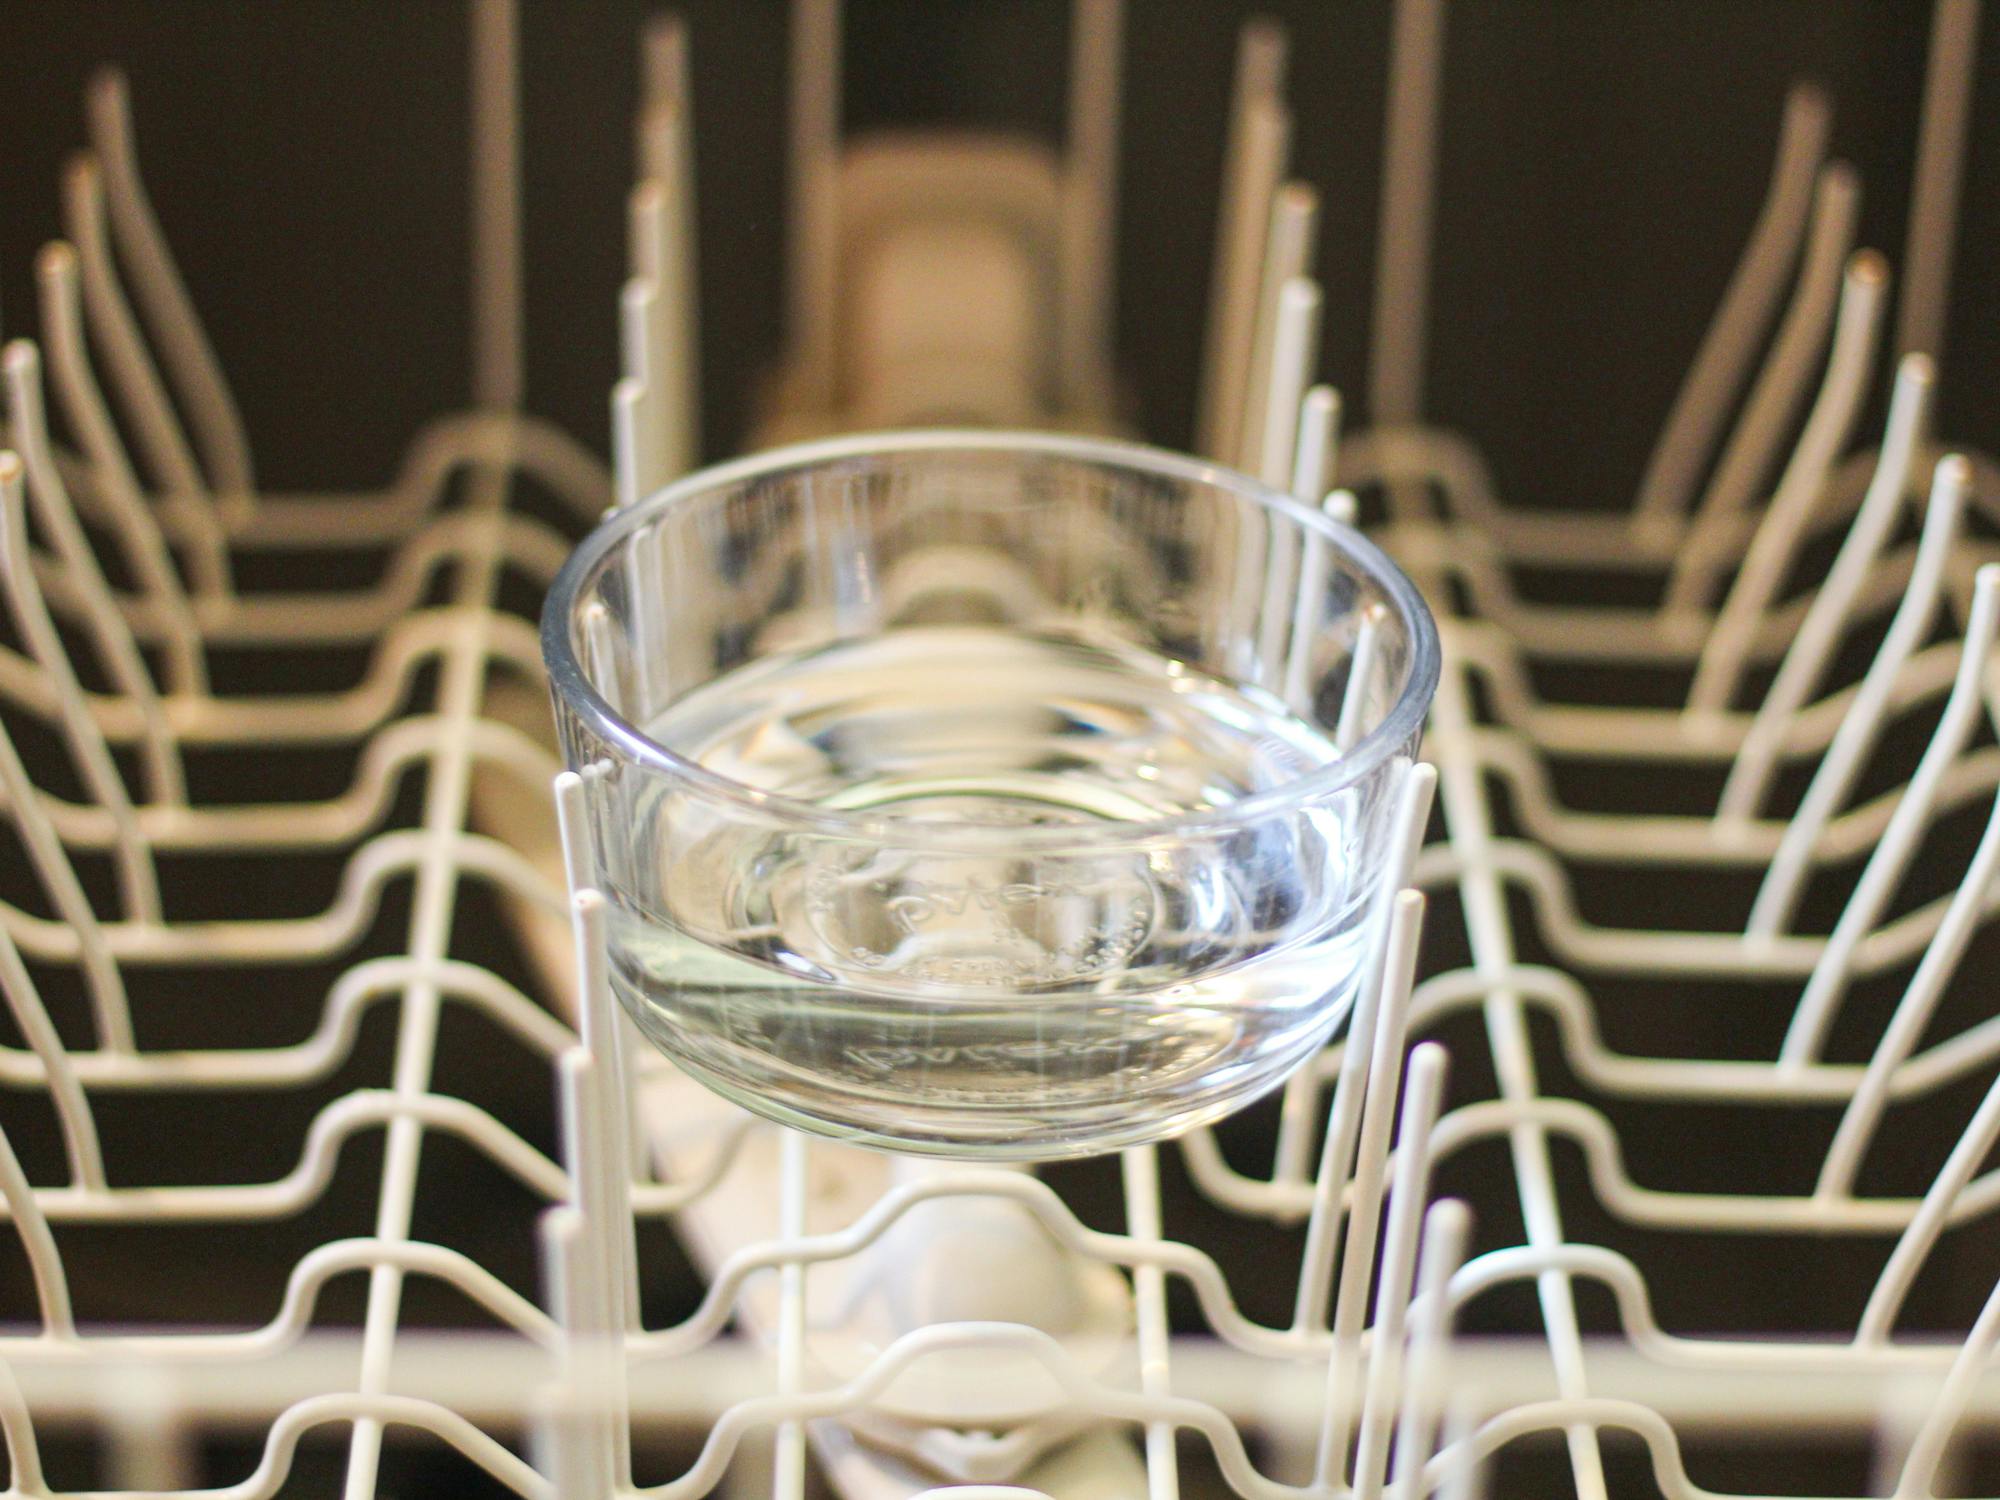 a dishwasher safe bowl filled with vinegar sitting on the top rack of a dishwasher